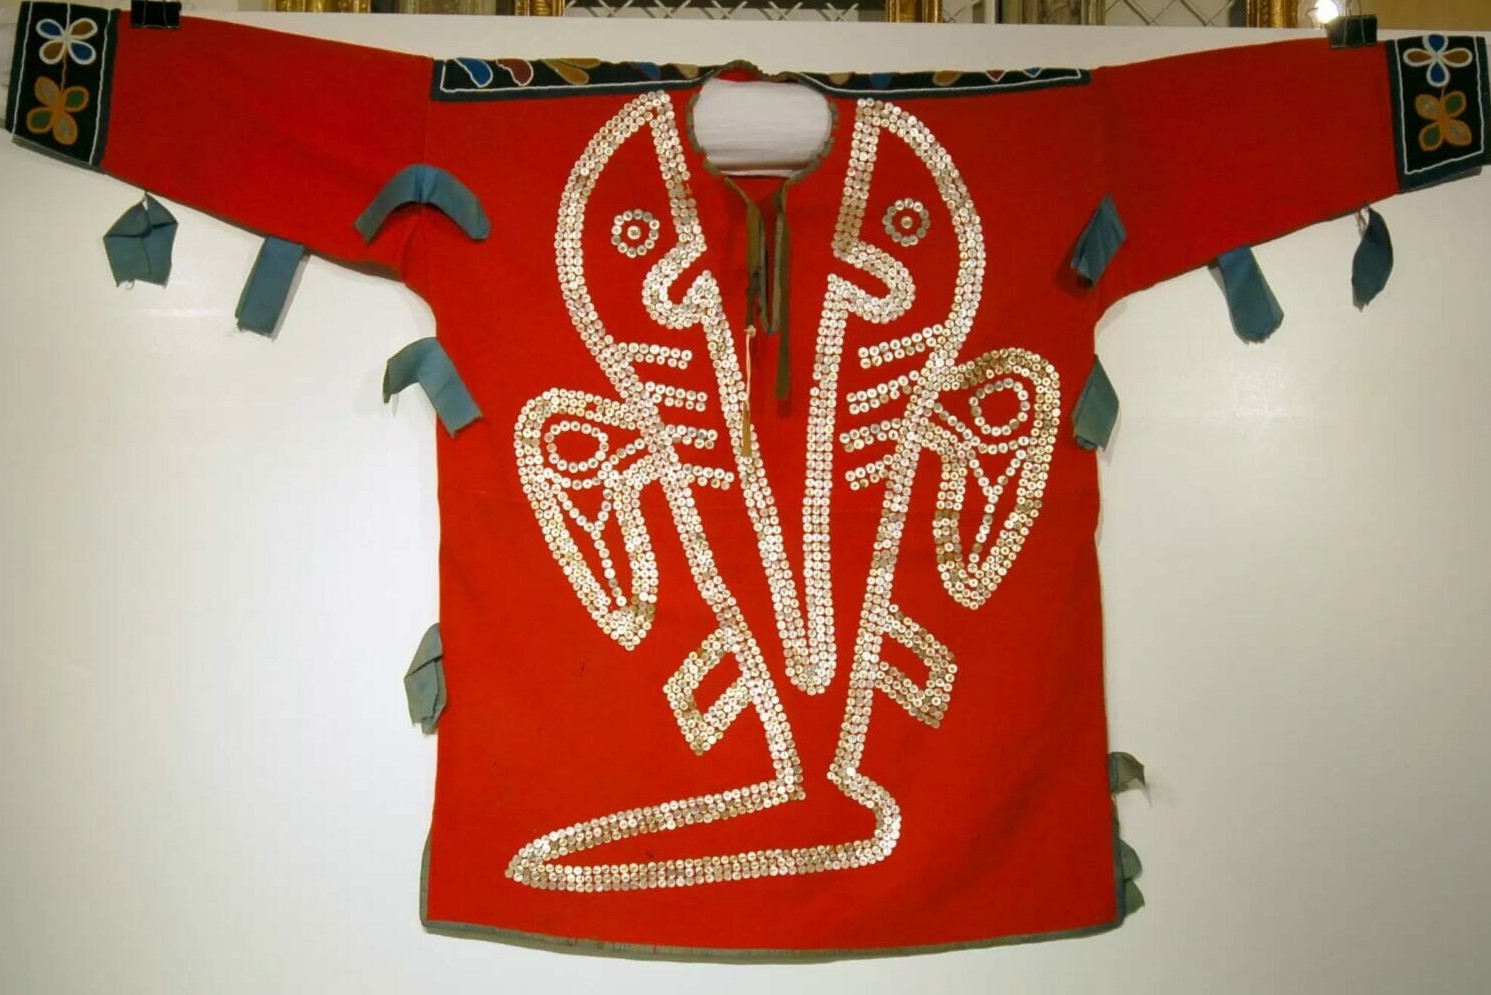 a red mudshark shirt with ornate designs